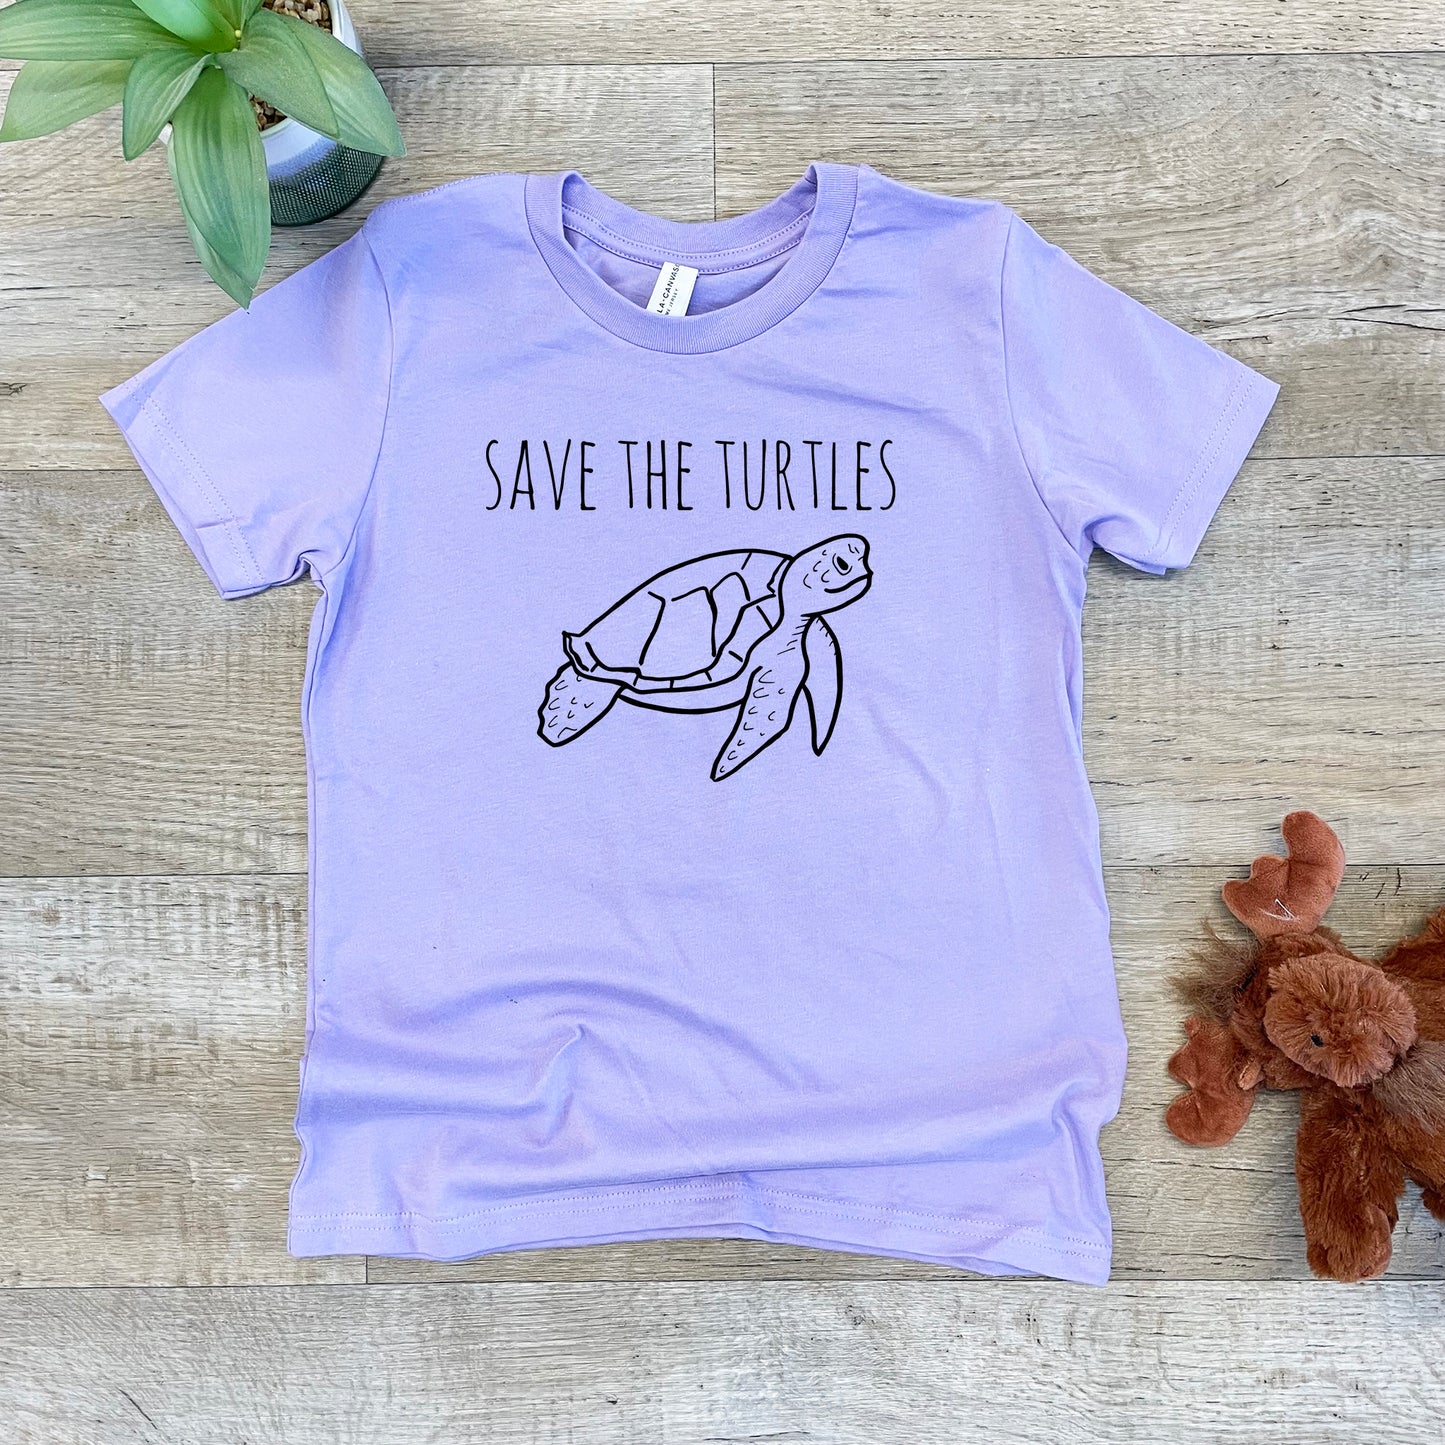 Save The Turtles - Kid's Tee - Columbia Blue or Lavender